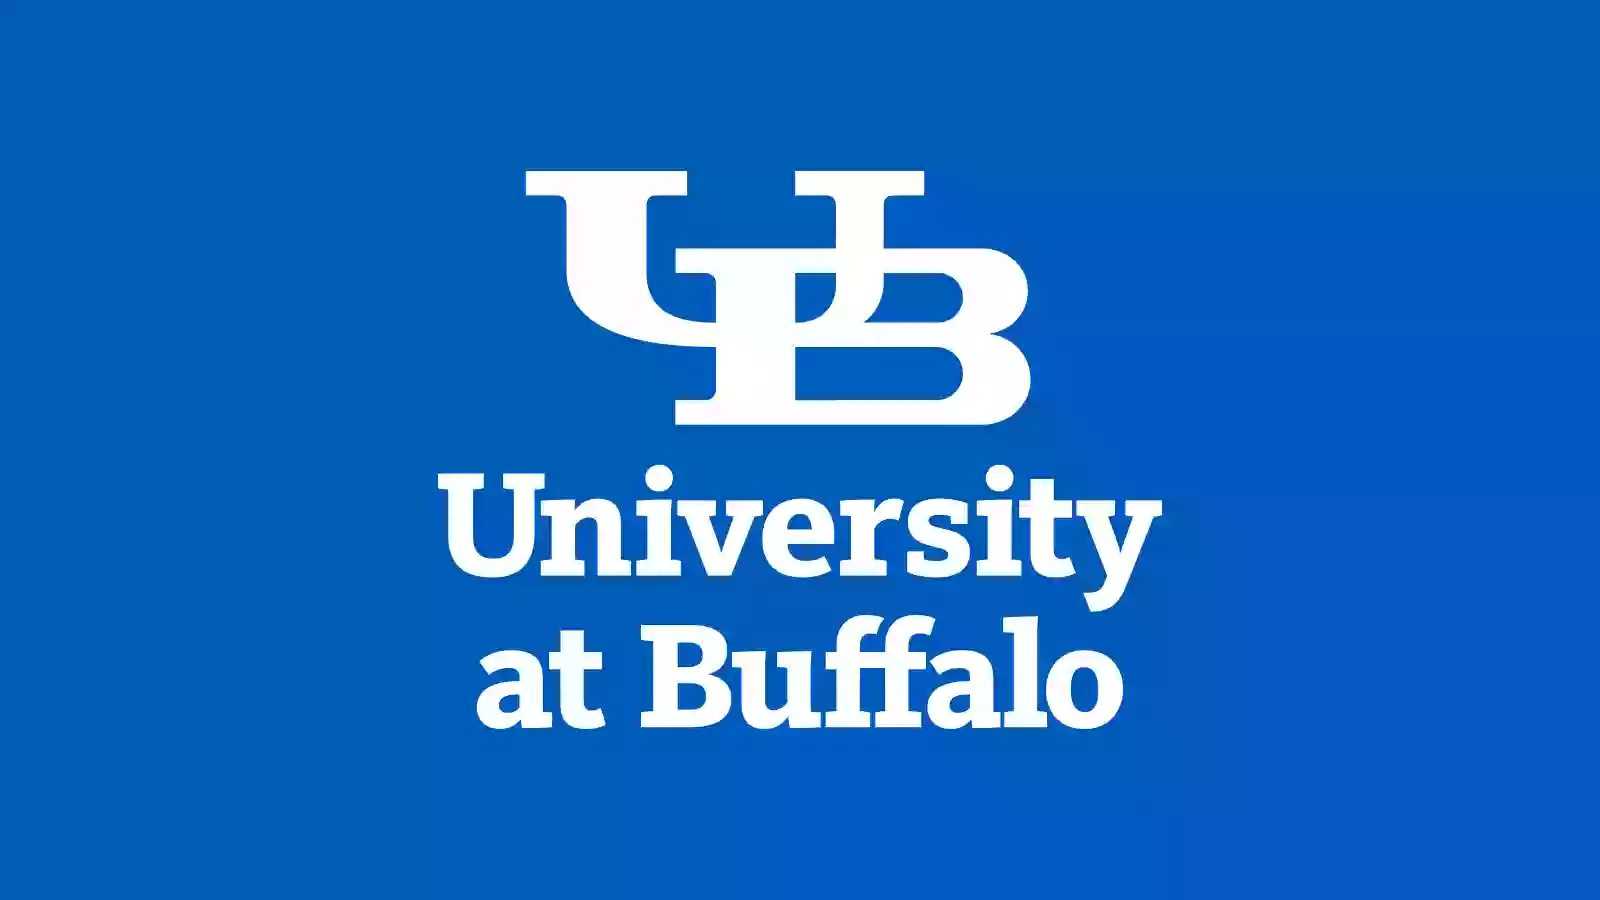 Founders Plaza - University at Buffalo